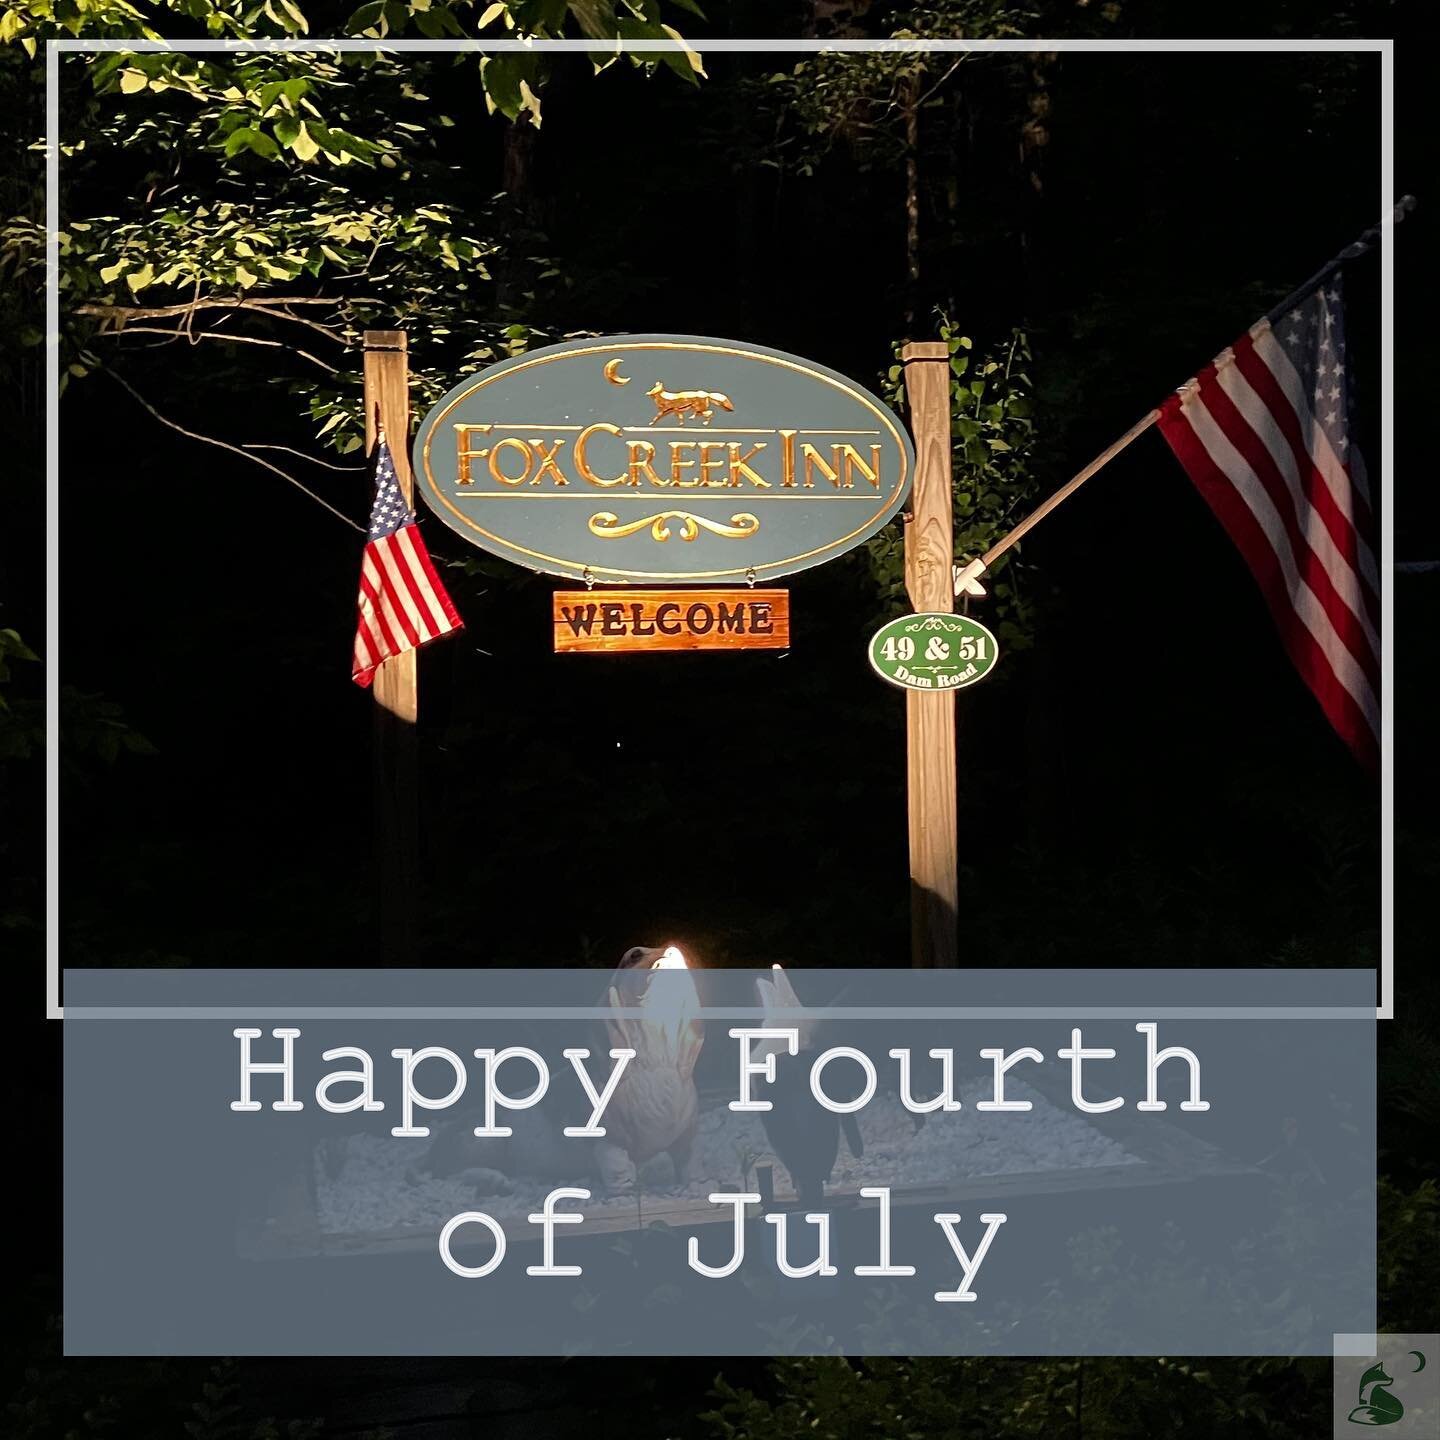 🇺🇸Happy Fourth of July 🇺🇸
&bull;&bull;
From the Fox Creek Inn
📸 : Dan Perreault
#fourthofjuly #independenceday #holiday #summer #vermont #vt #inn #foxcreekinn